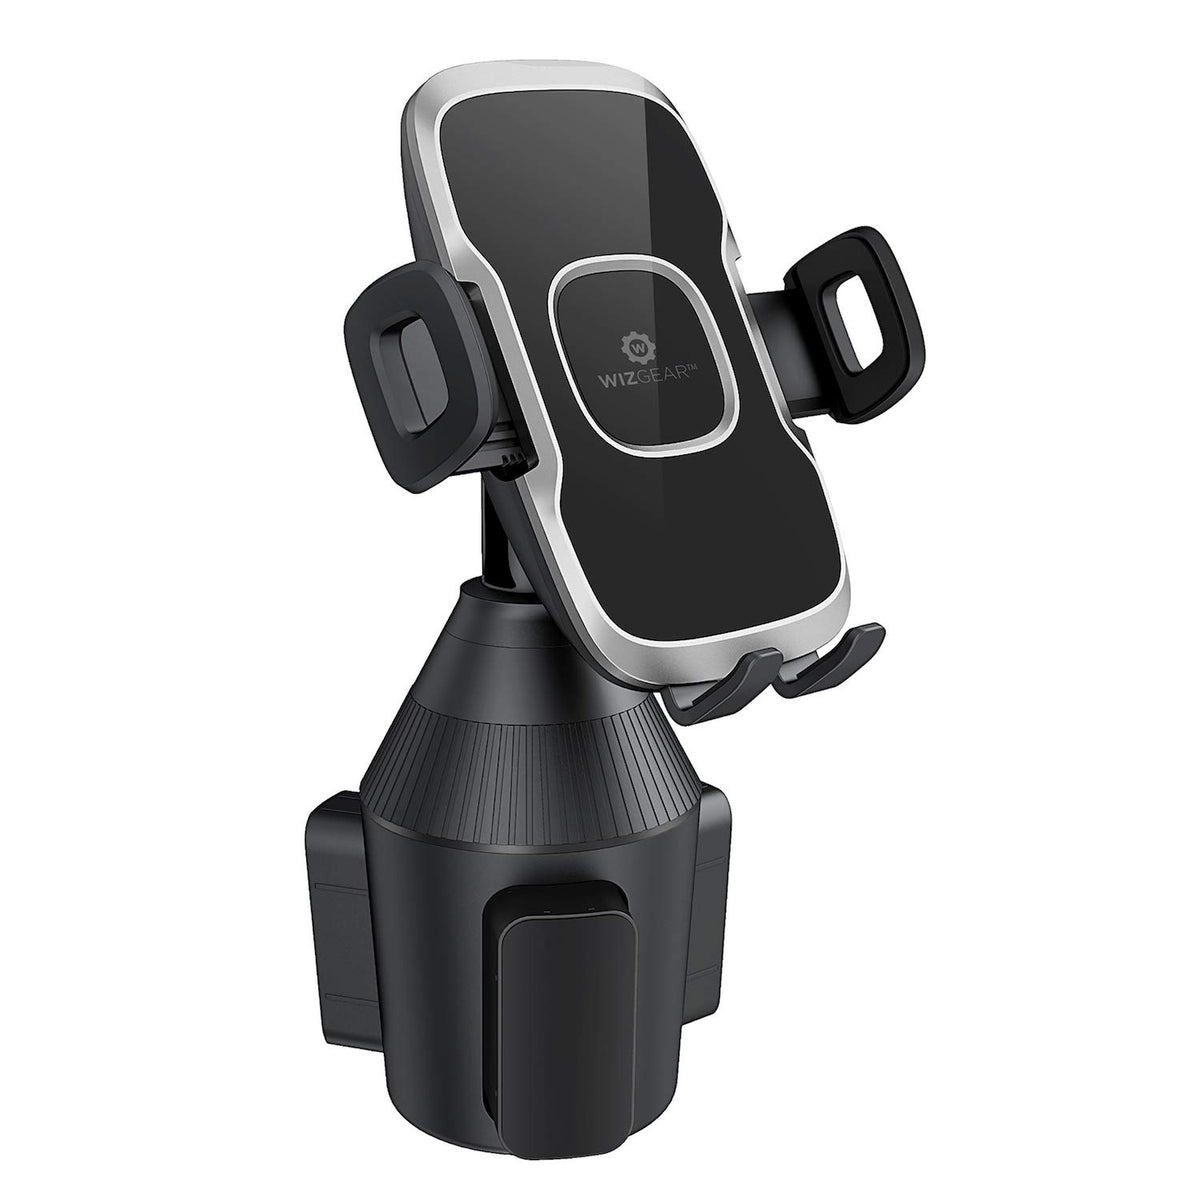 WixGear Cup Phone Holder for Car, Car Cup Holder Phone Mount Adjustabl